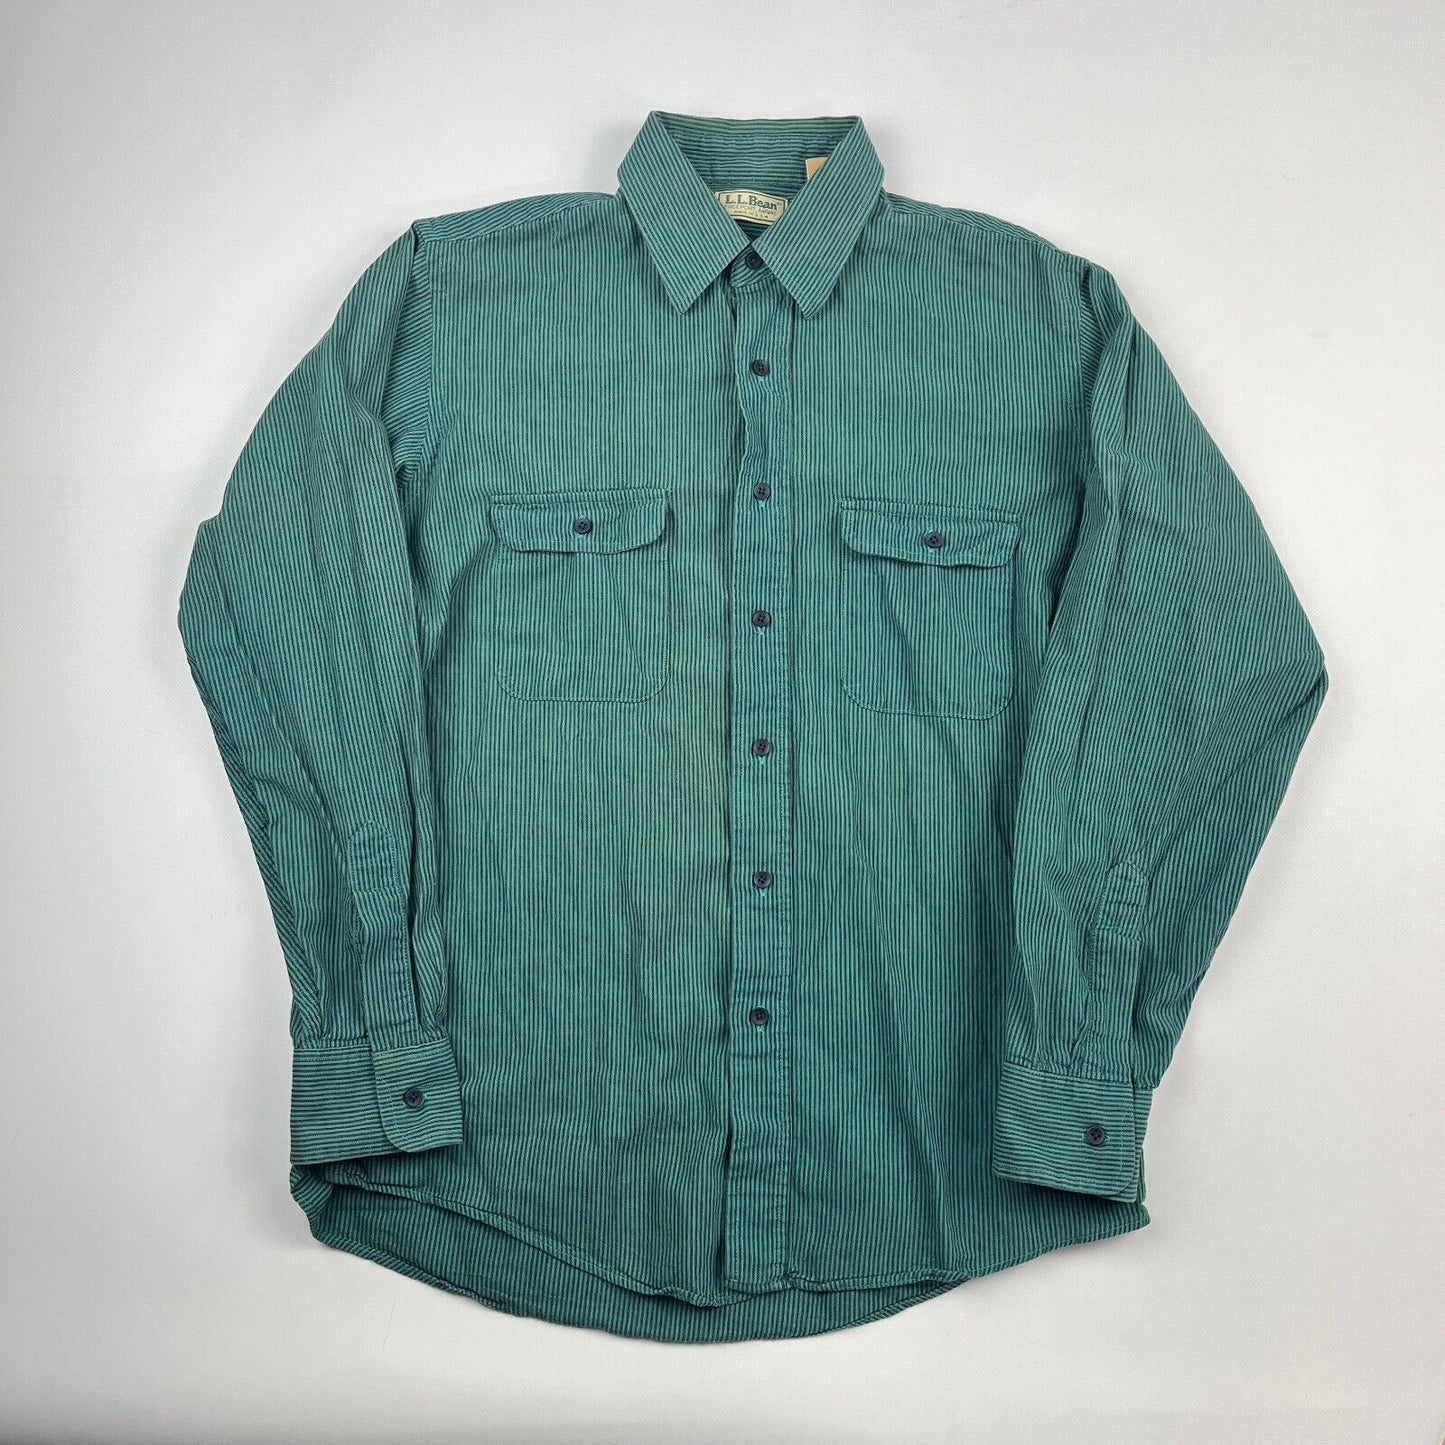 VINTAGE 90s L.L Bean Striped Green Button Up Shirt sz Medium Men